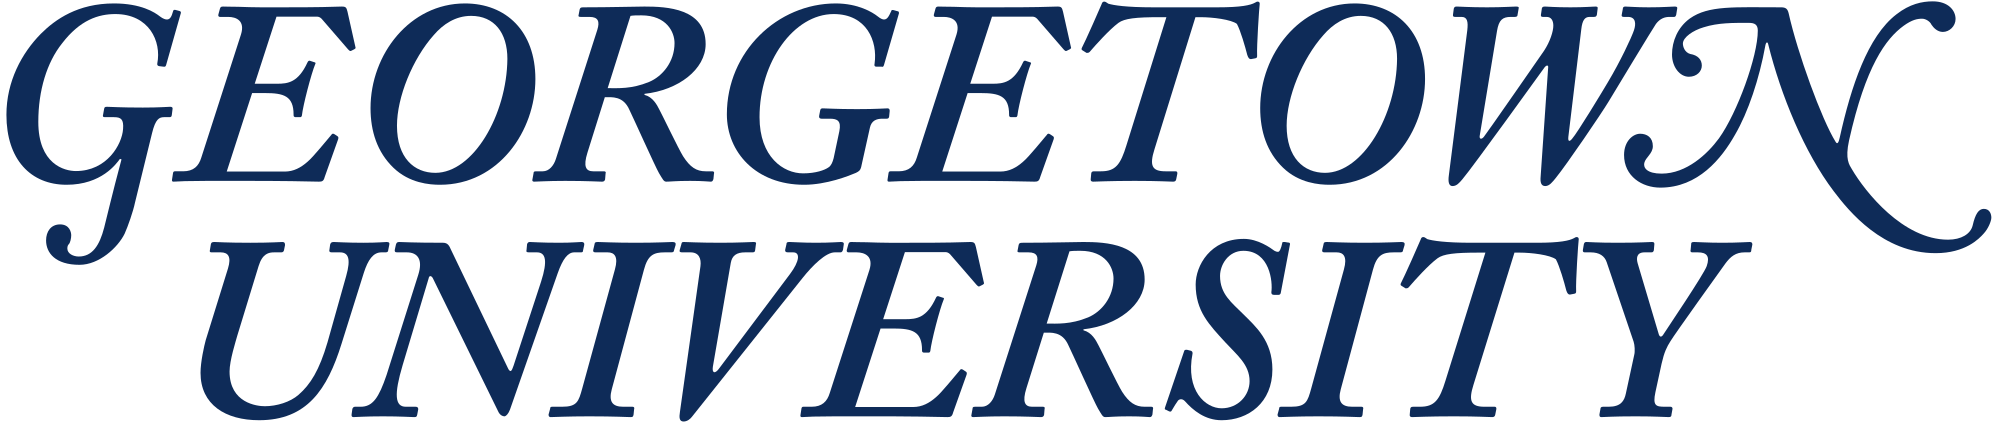 Georgetown_University_Logotype.svg (1).png